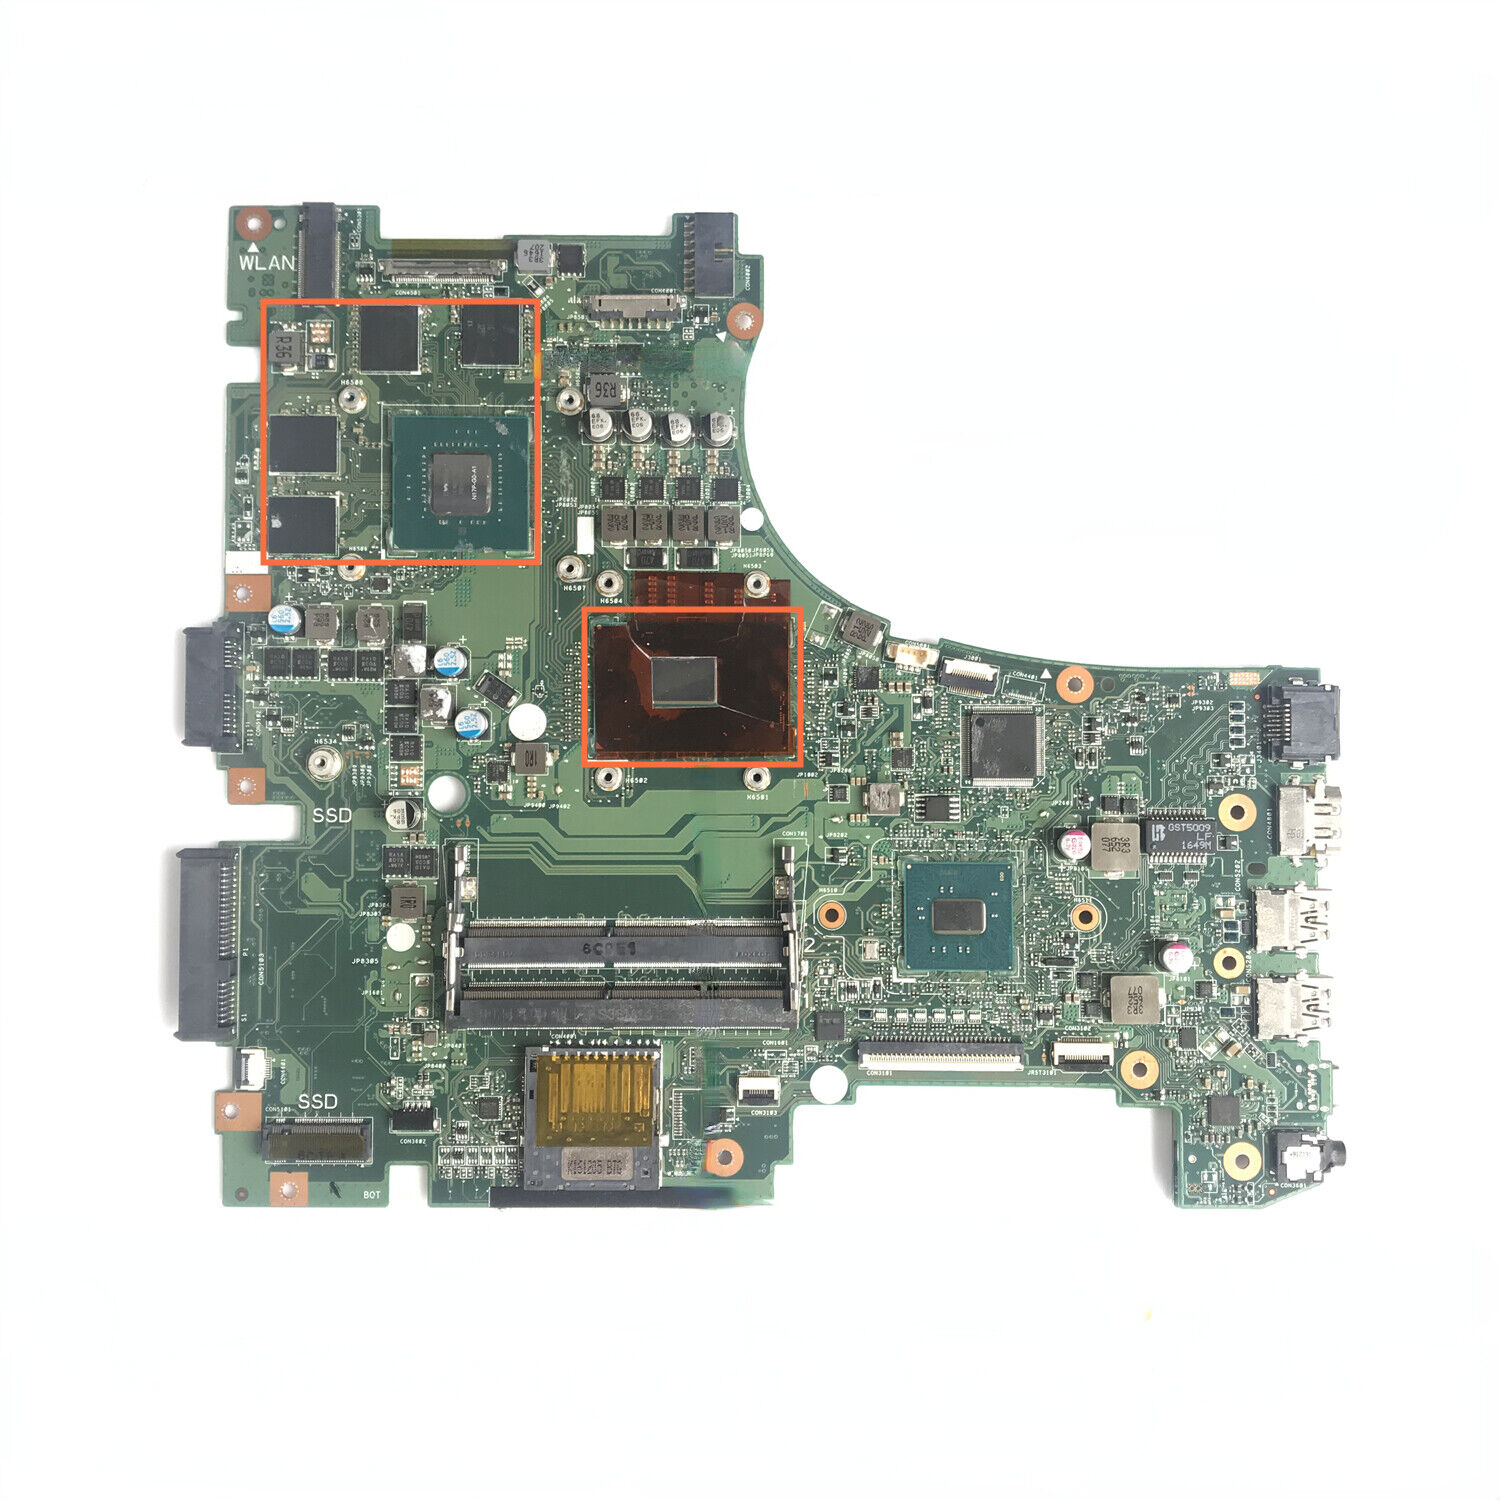 Motherboard For Asus GL553VD/VE FX/ZX553V I5-7300HQ I7 GTX1050/1050TI RGB